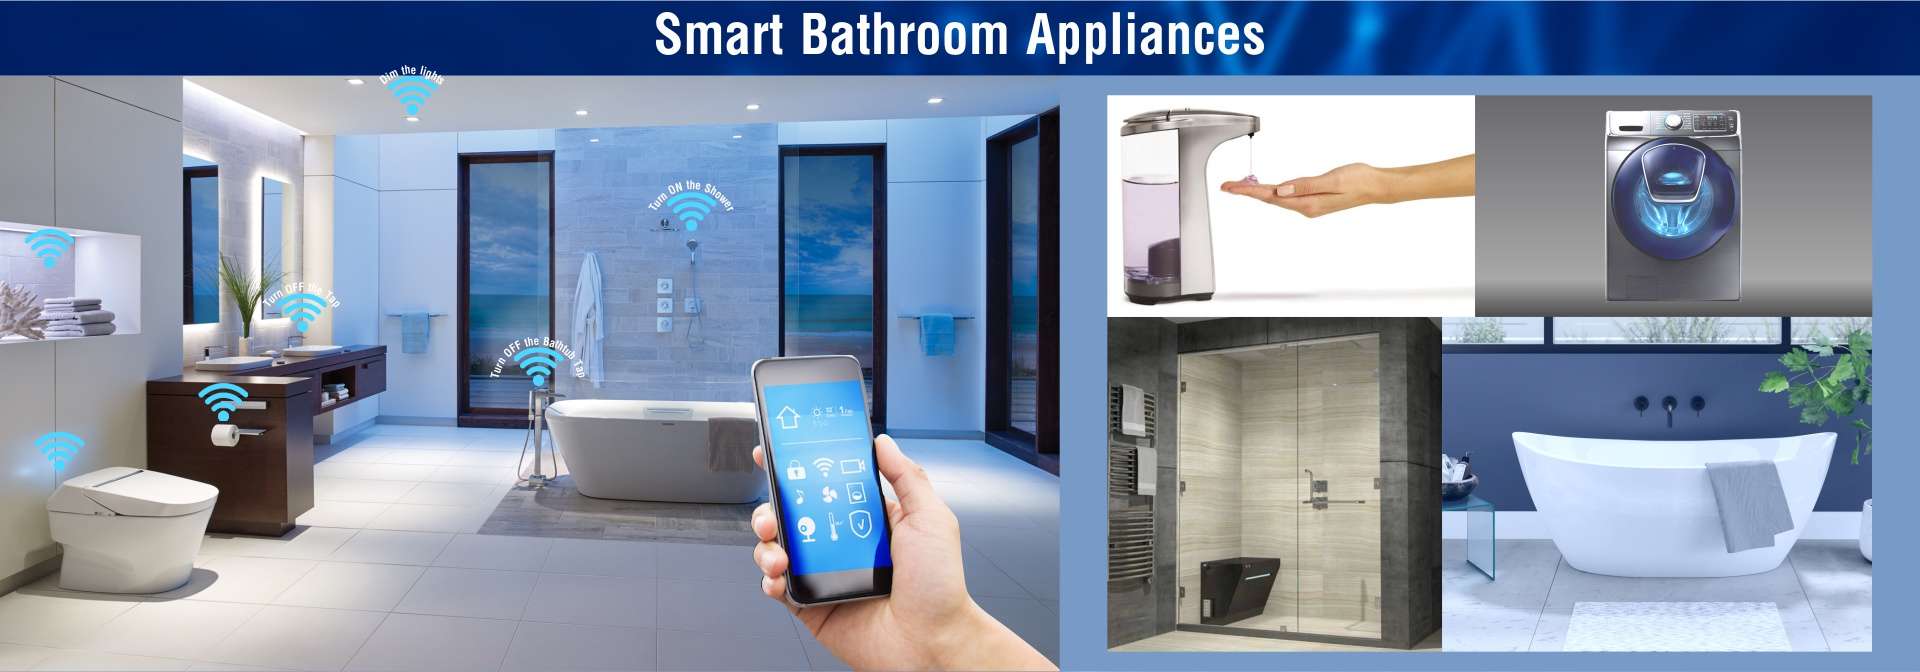 http://www.faststreamtech.com/wp-content/uploads/2021/02/Smart_bathroom.jpg